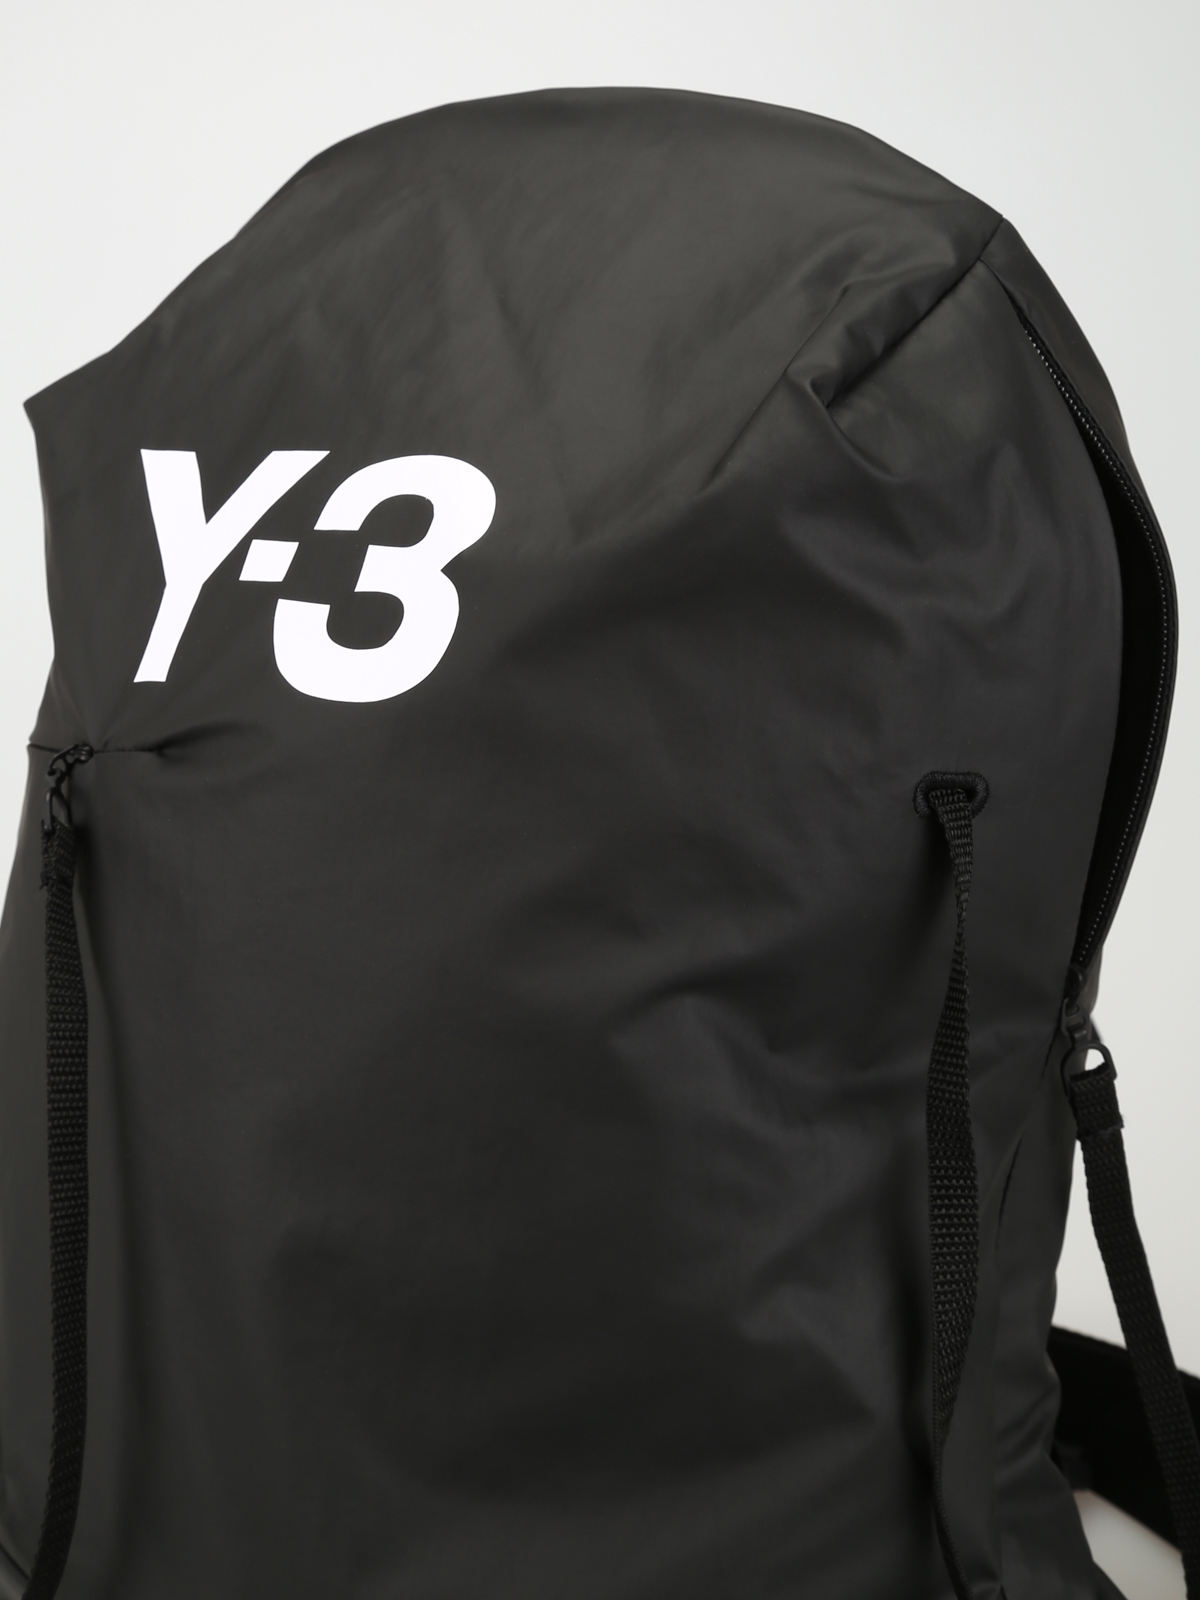 Bungee backpack - backpacks - DY0538 